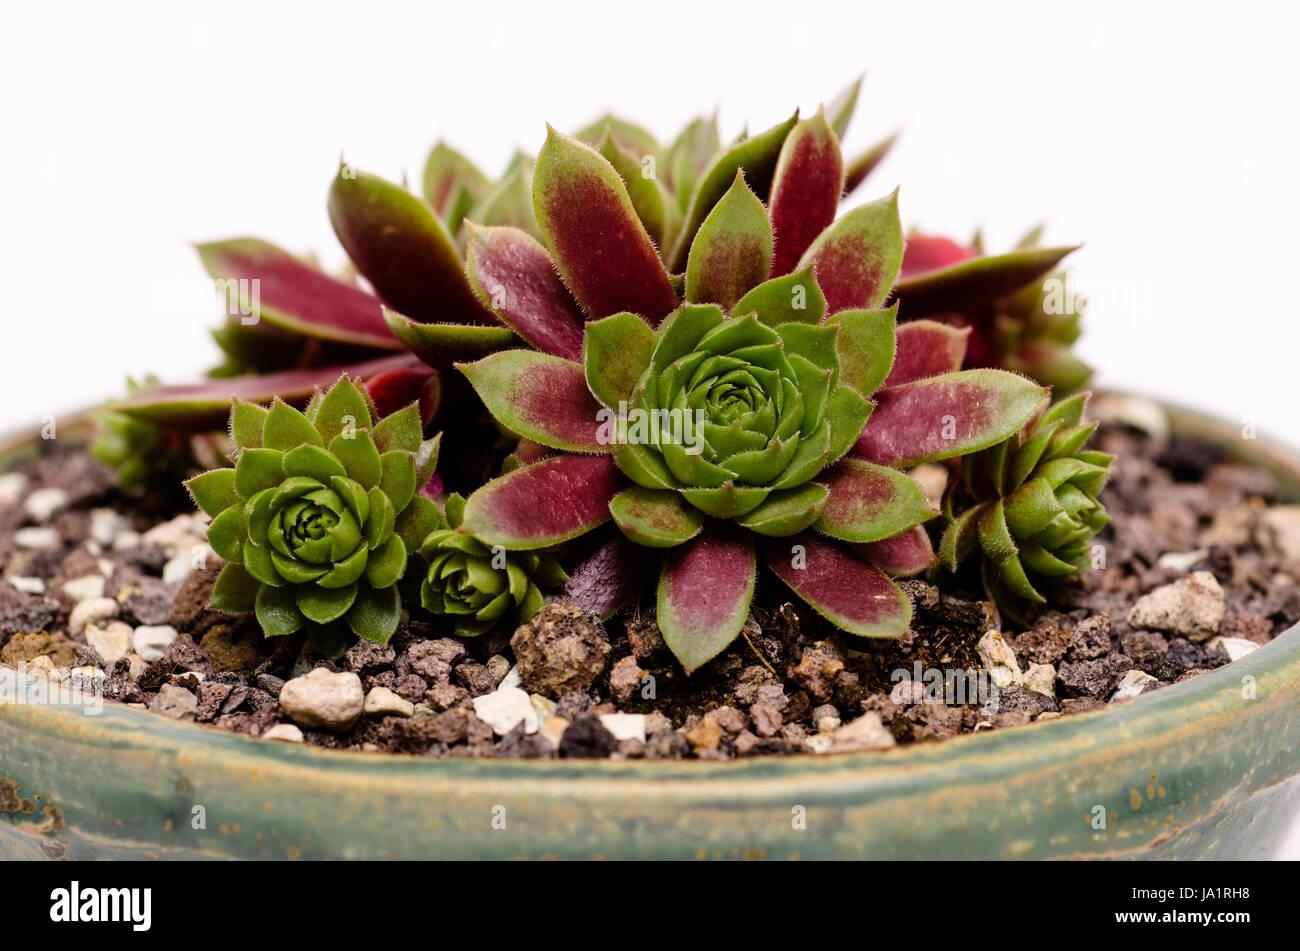 green, substrate, red, plant, bowl, hauswurz, kusamono, sempervivum, Stock Photo